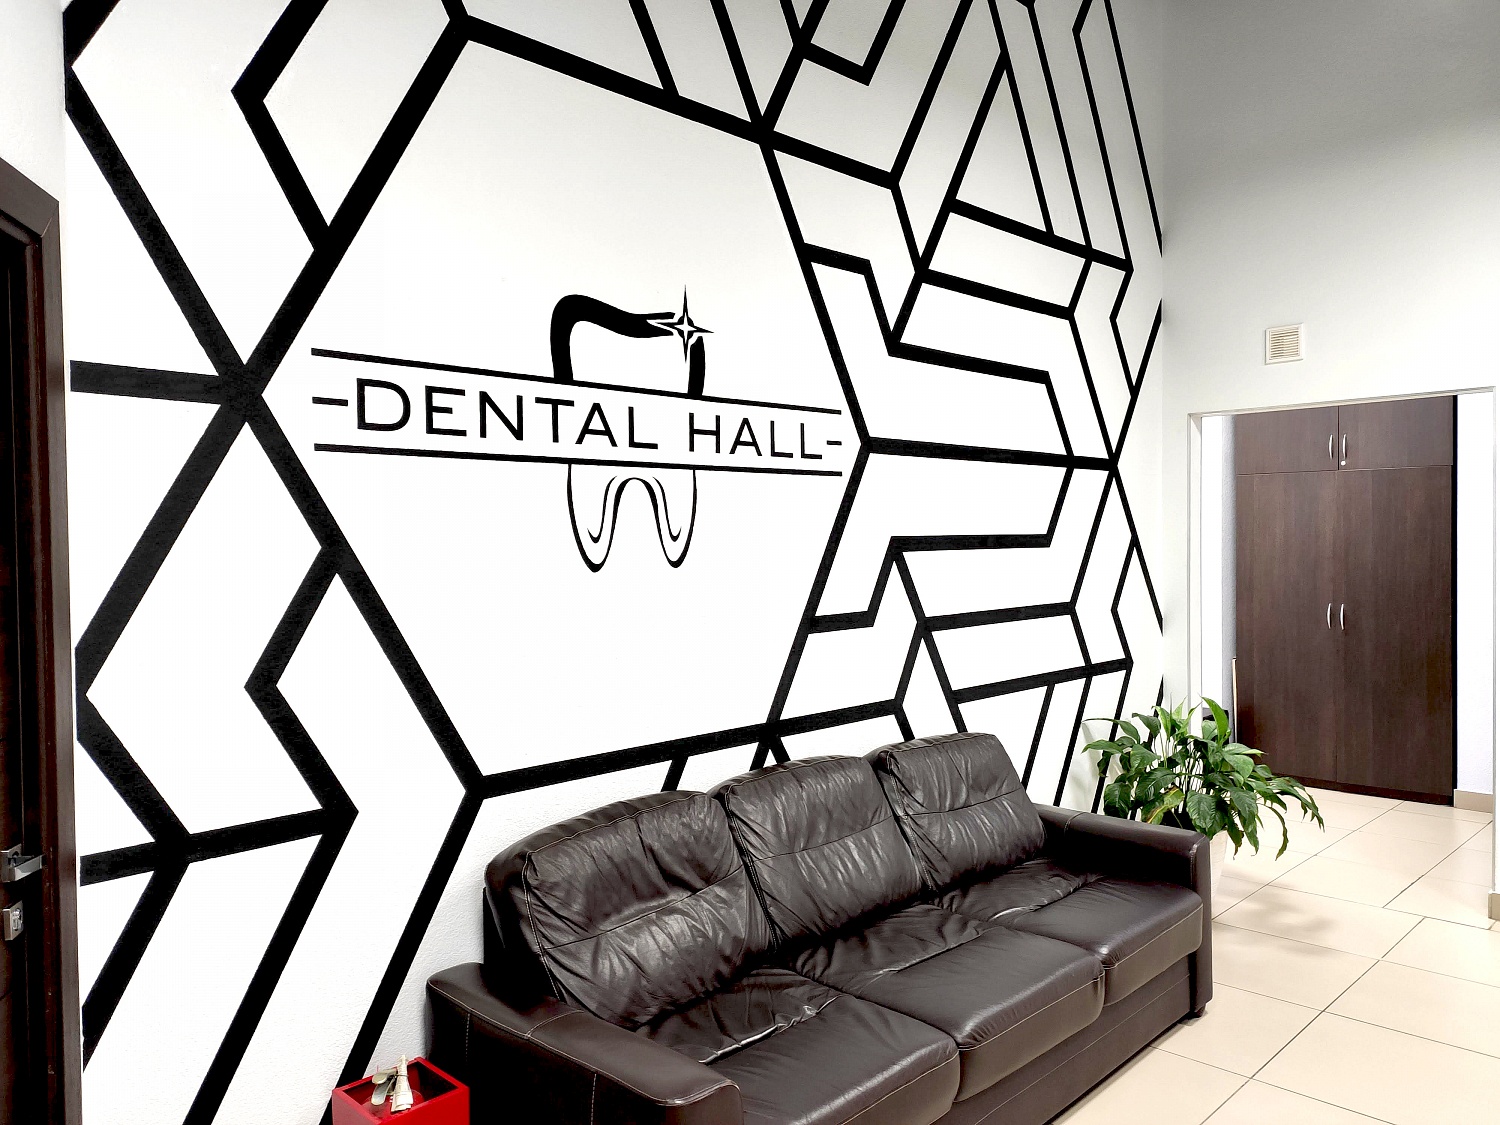 Dental Hall